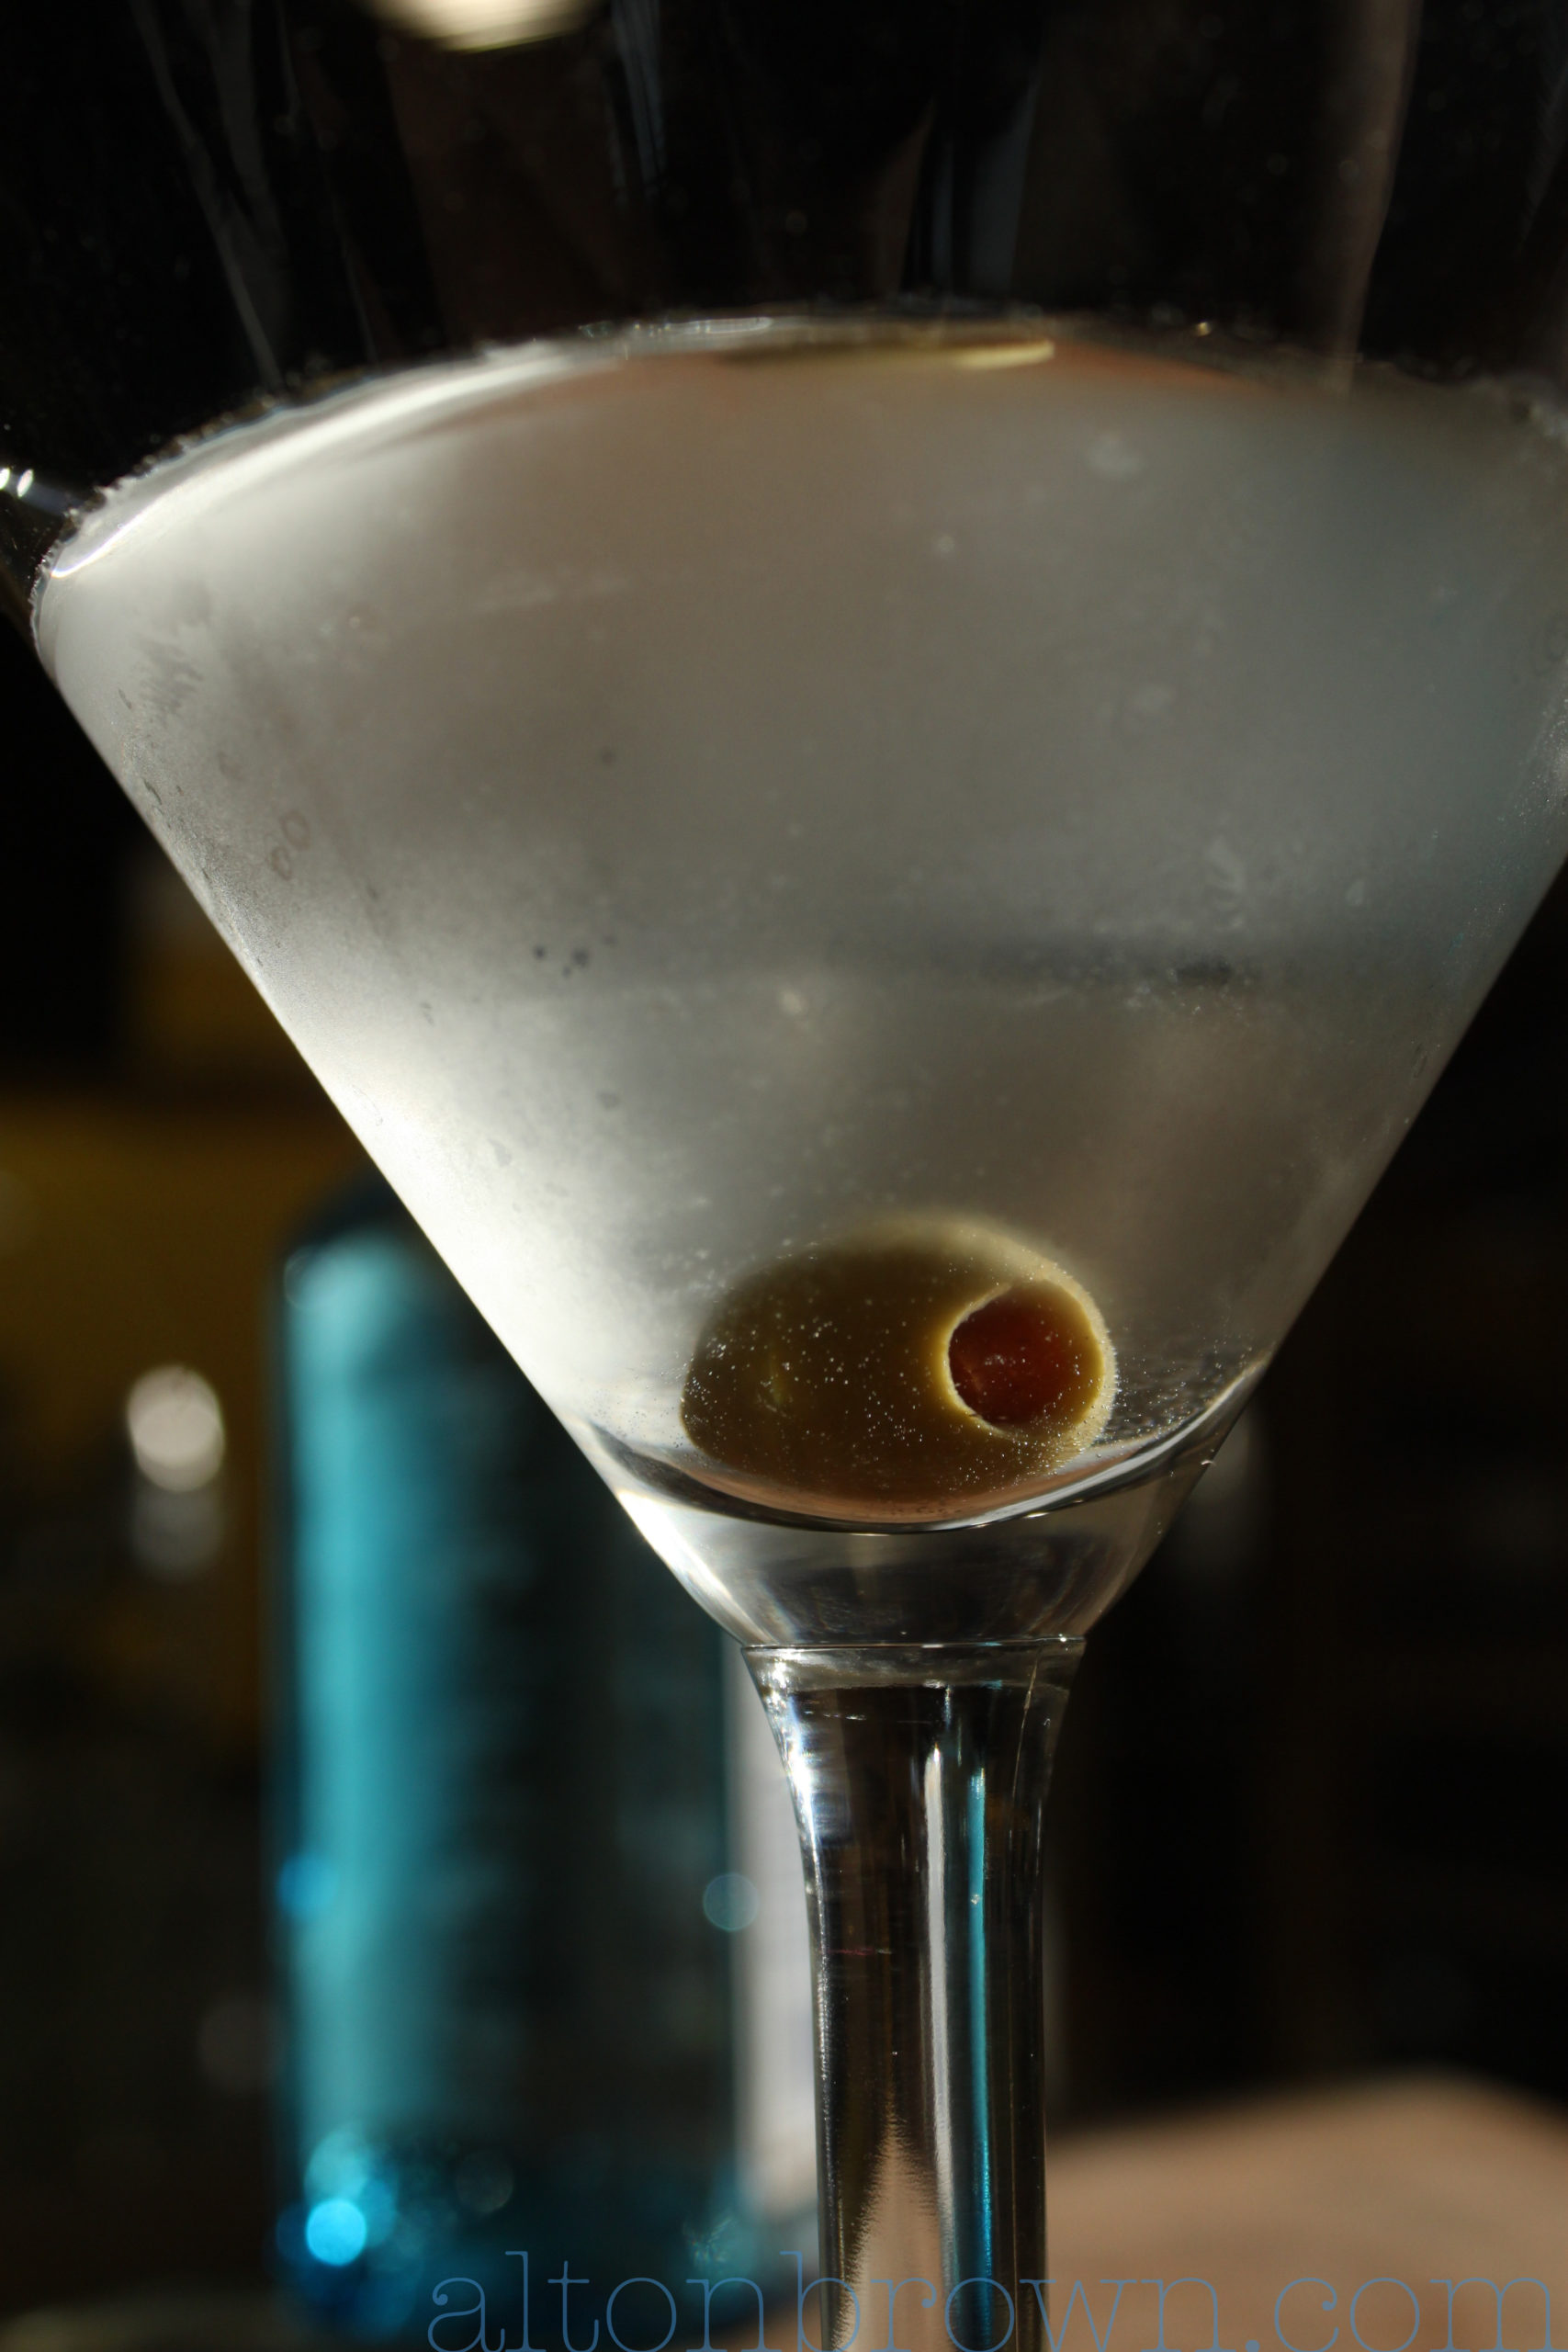 Alton Brown's classic martini in a martini glass with a green olive.